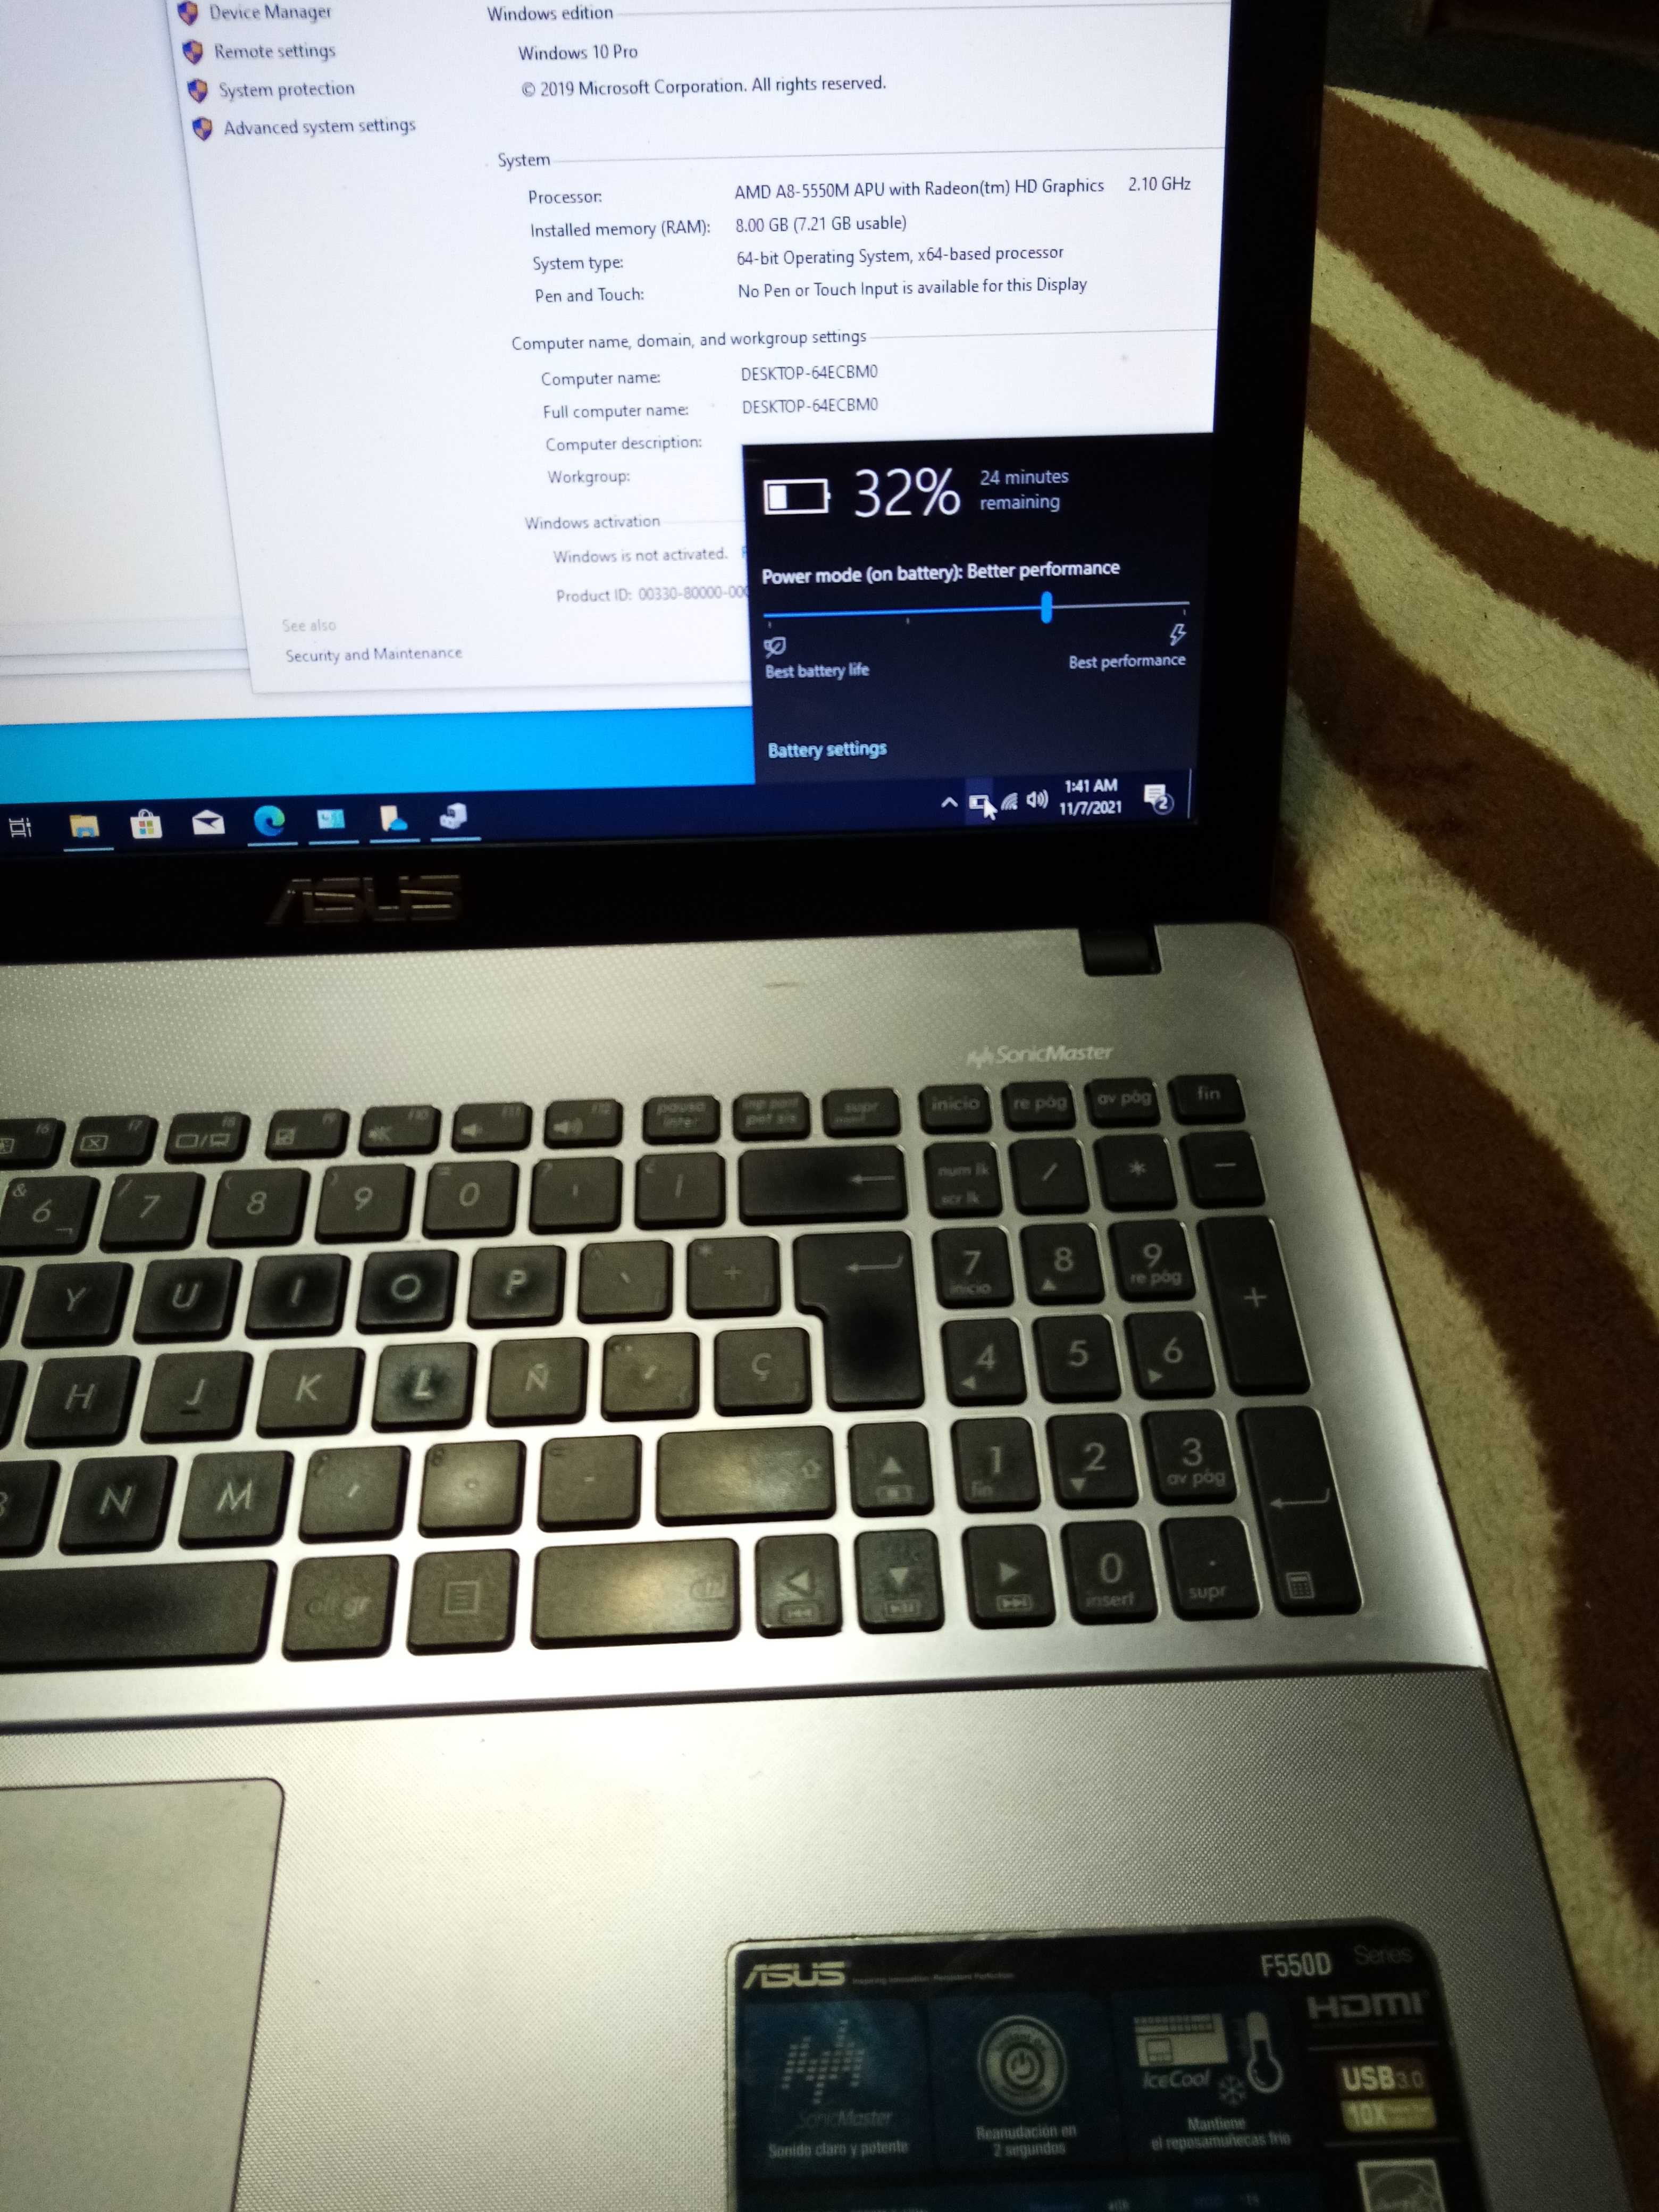 Laptop Asus F550d amd a8-5550m 8gb ram  dual graphics HD 8670m hdd 1tb